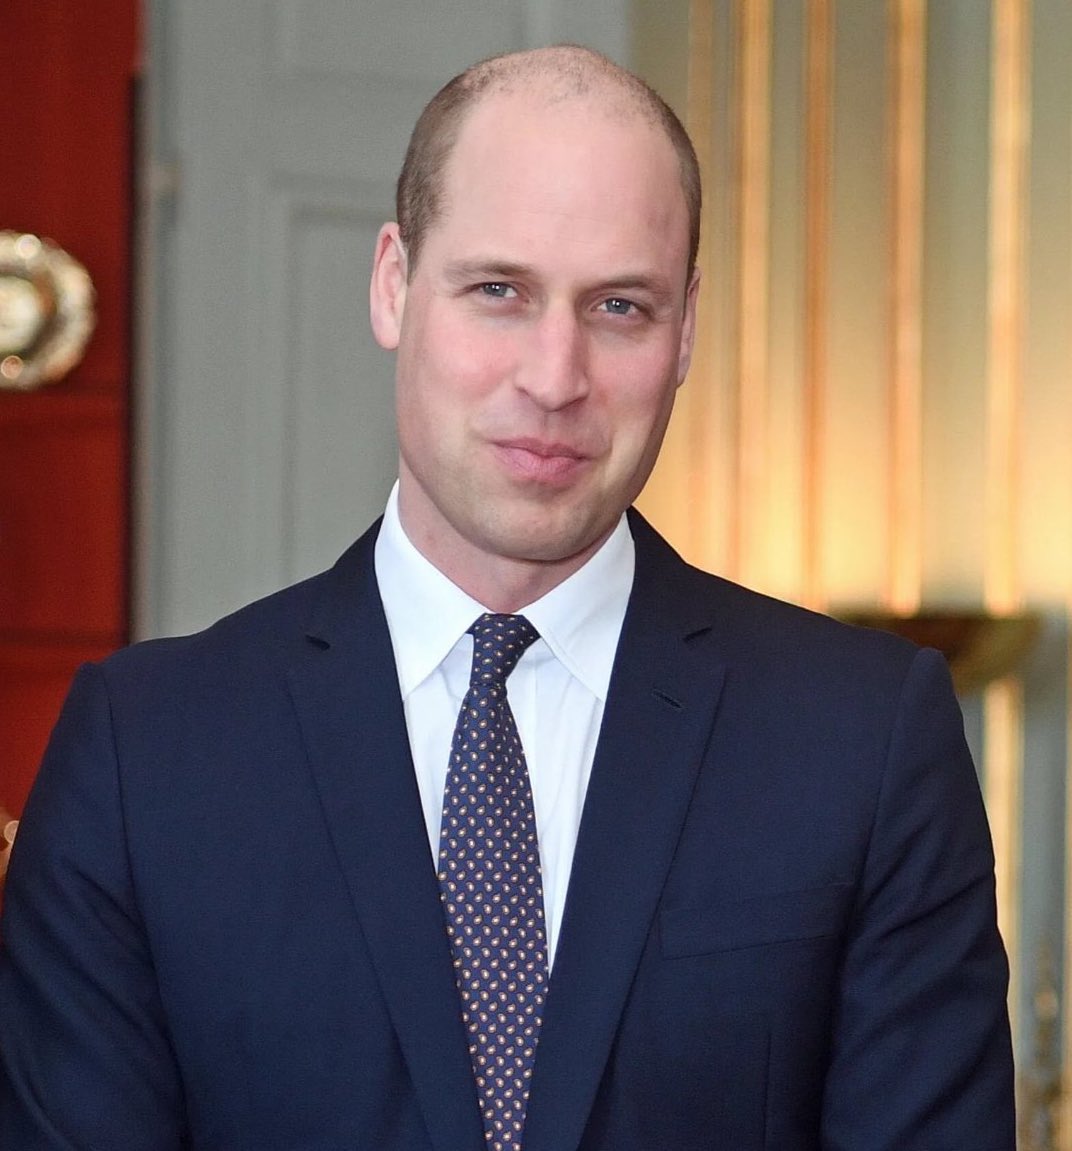 RT @laendolove: Prince William               lewis hamilton
     at 38                                  at 36 https://t.co/GIuspokp61